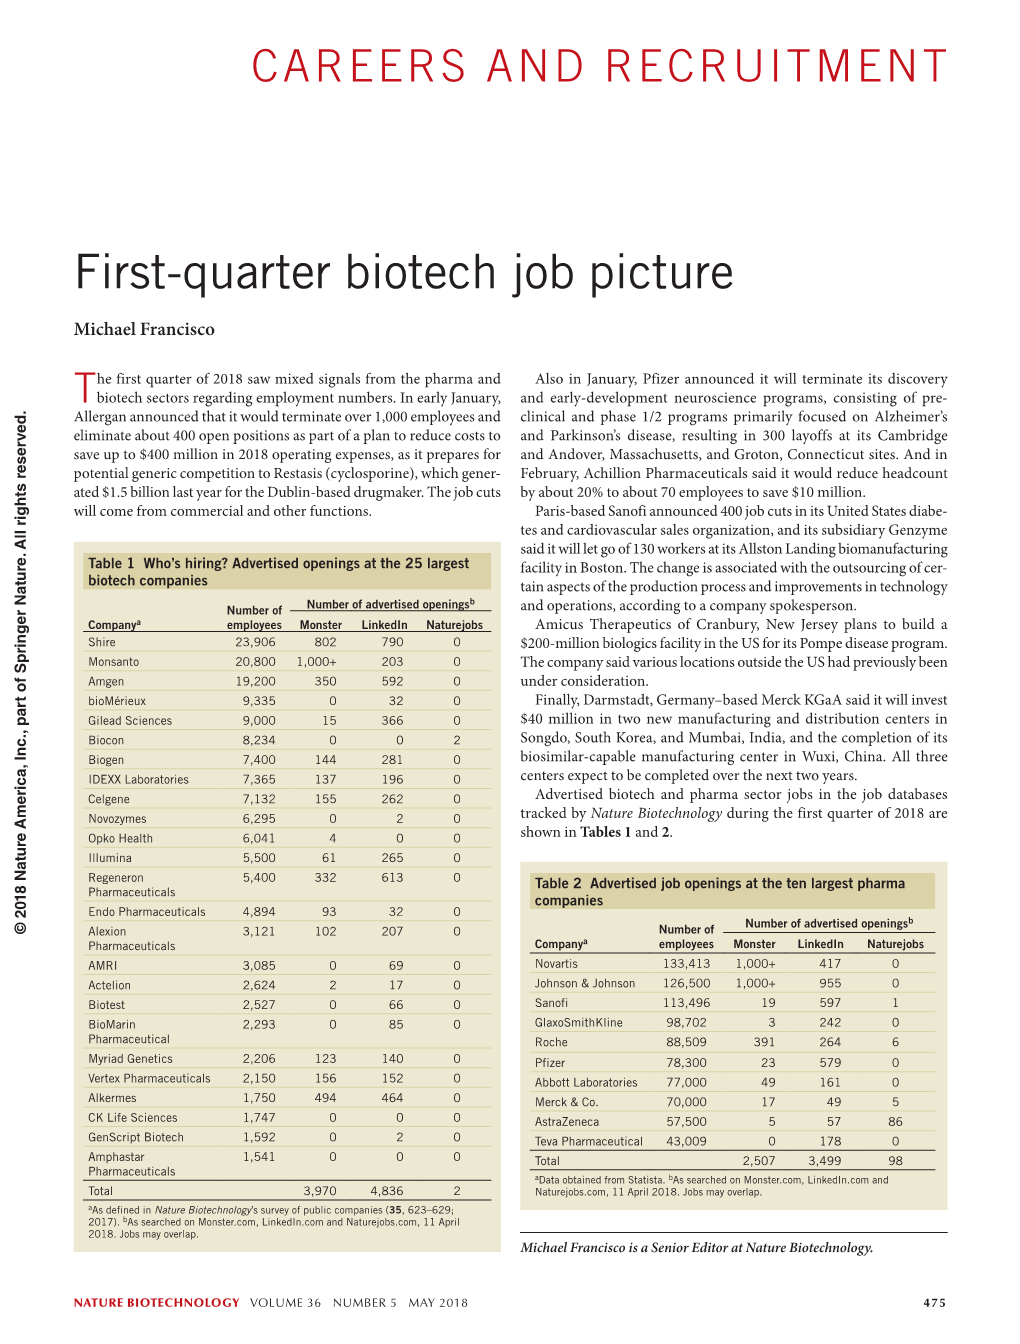 First-Quarter Biotech Job Picture